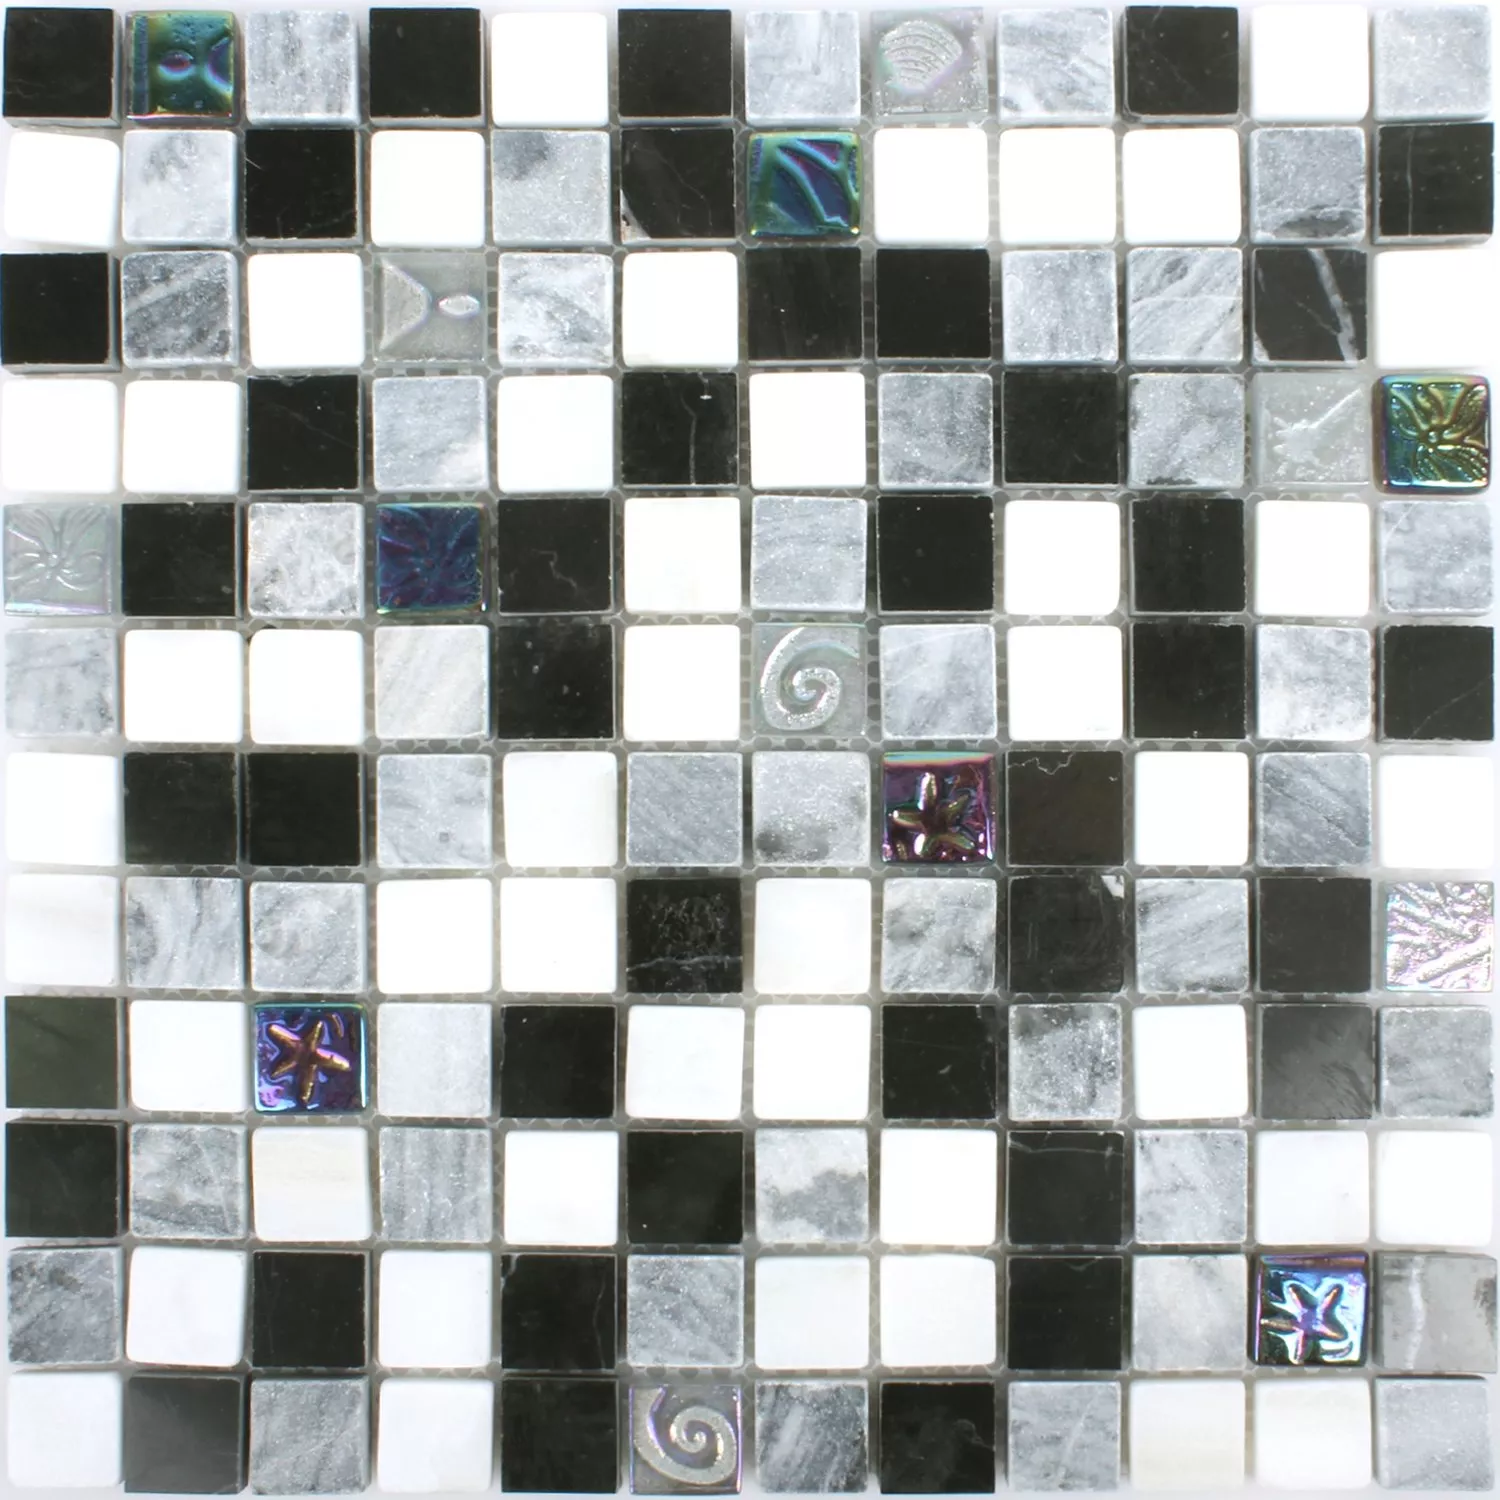 Campione Mosaico Relief Marmo Vetro Mix Nero Grigio Bianco